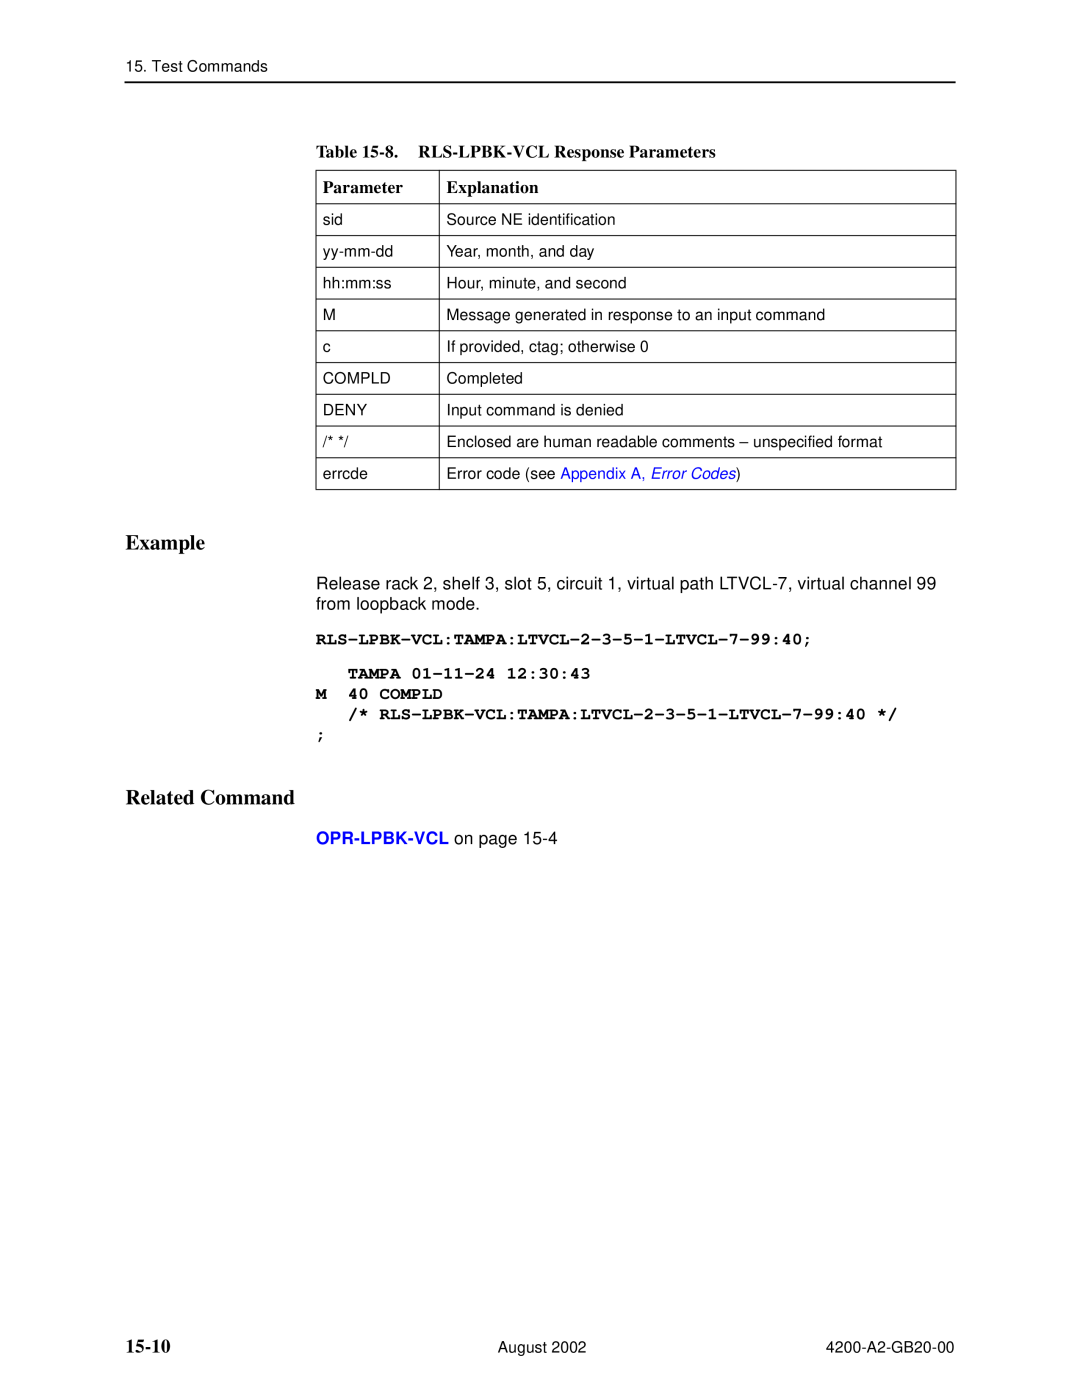 Paradyne 4200 manual 15-10, 8. RLS-LPBK-VCL Response Parameters, RLS-LPBK-VCLTAMPALTVCL-2-3-5-1-LTVCL-7-9940 TAMPA 01-11-24 